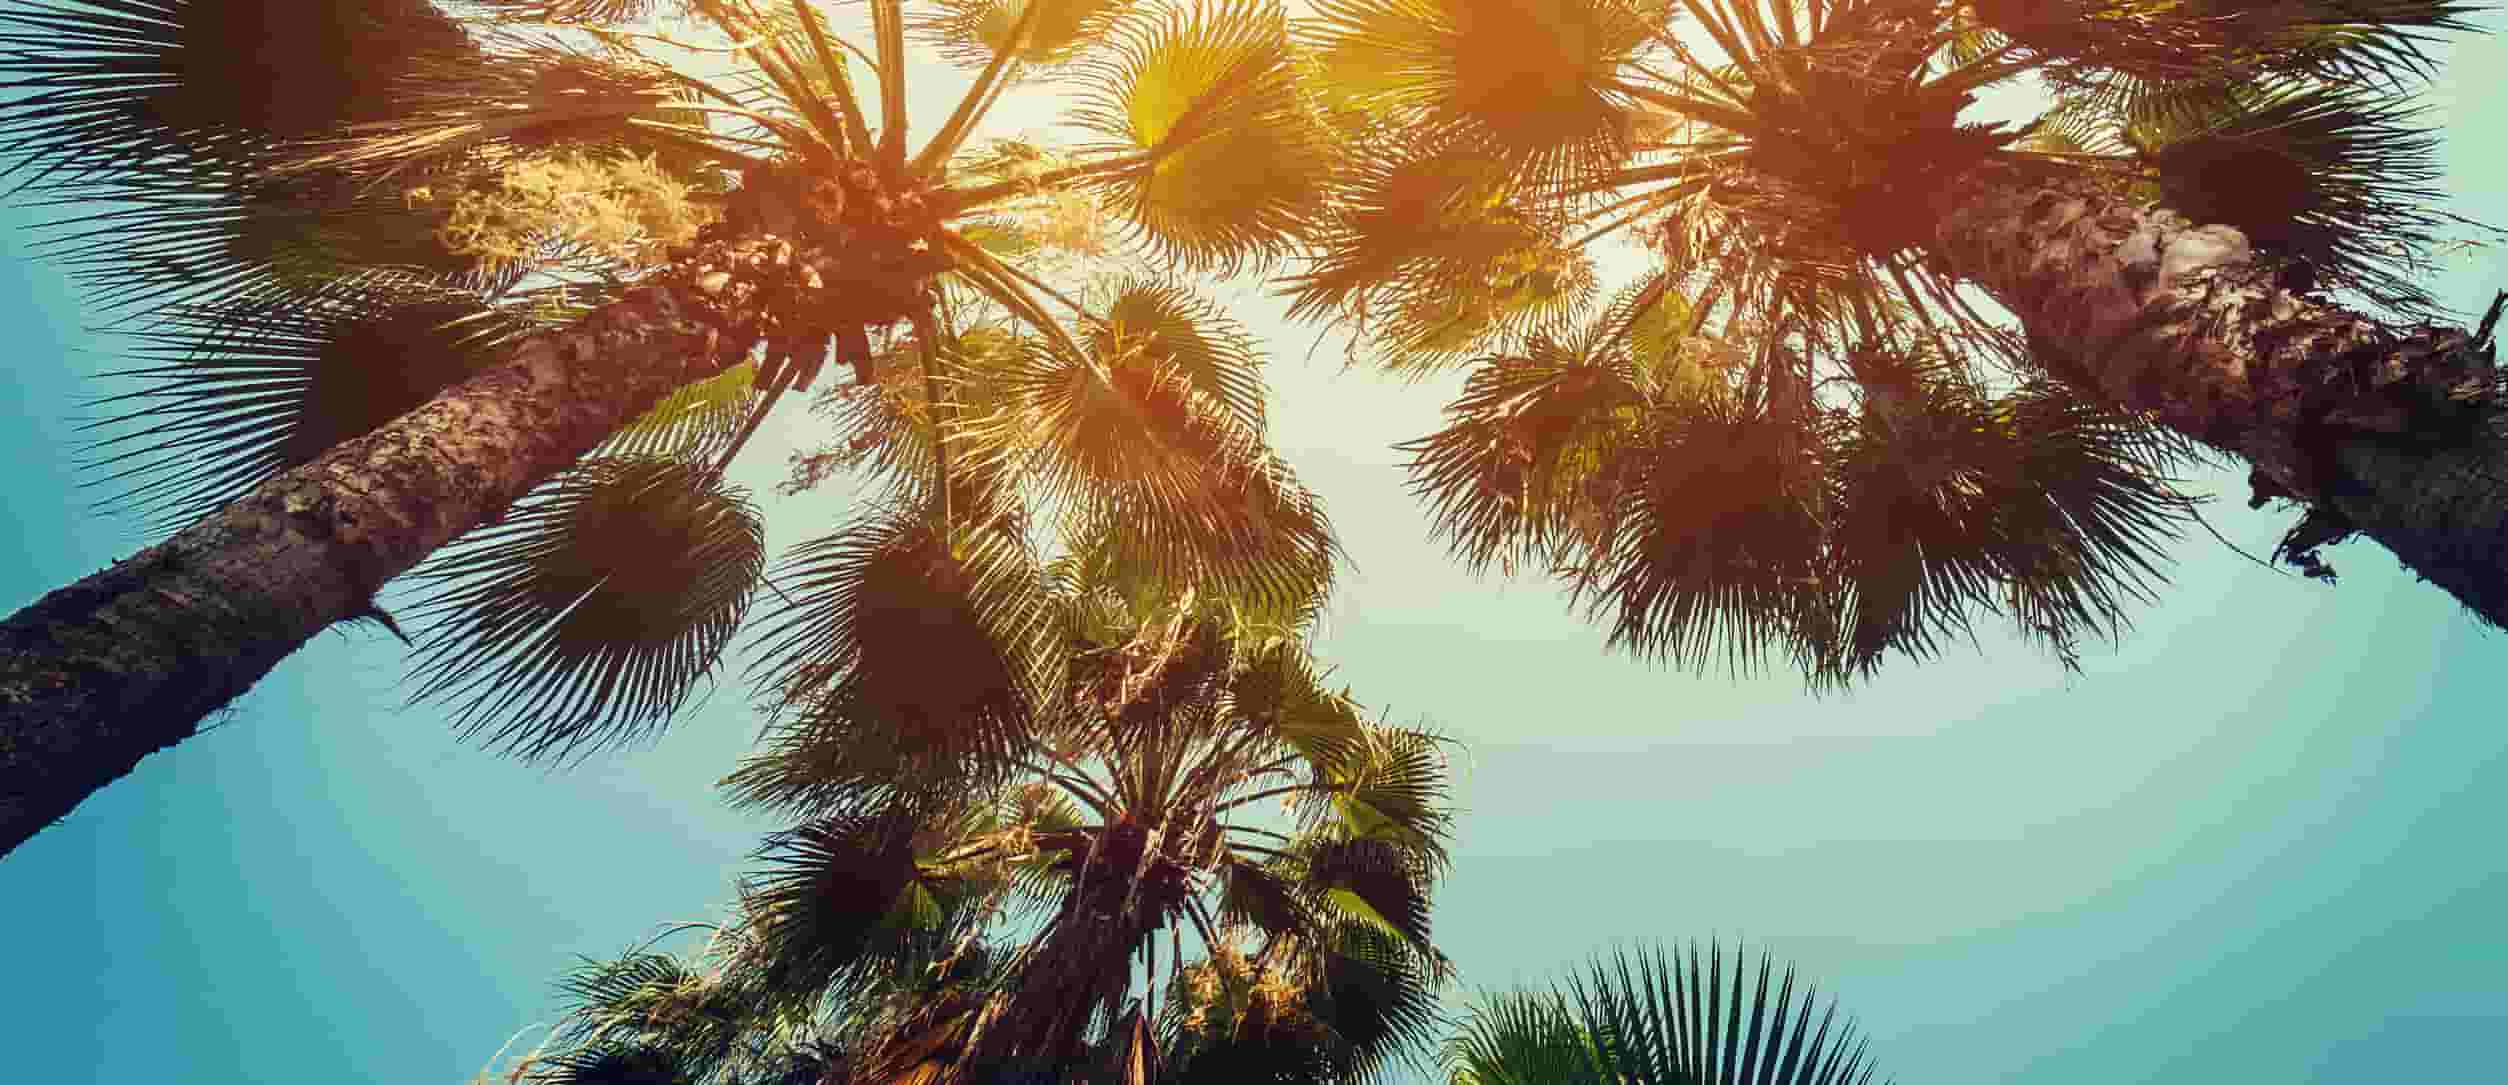 Palm trees in Miami near FIU campus